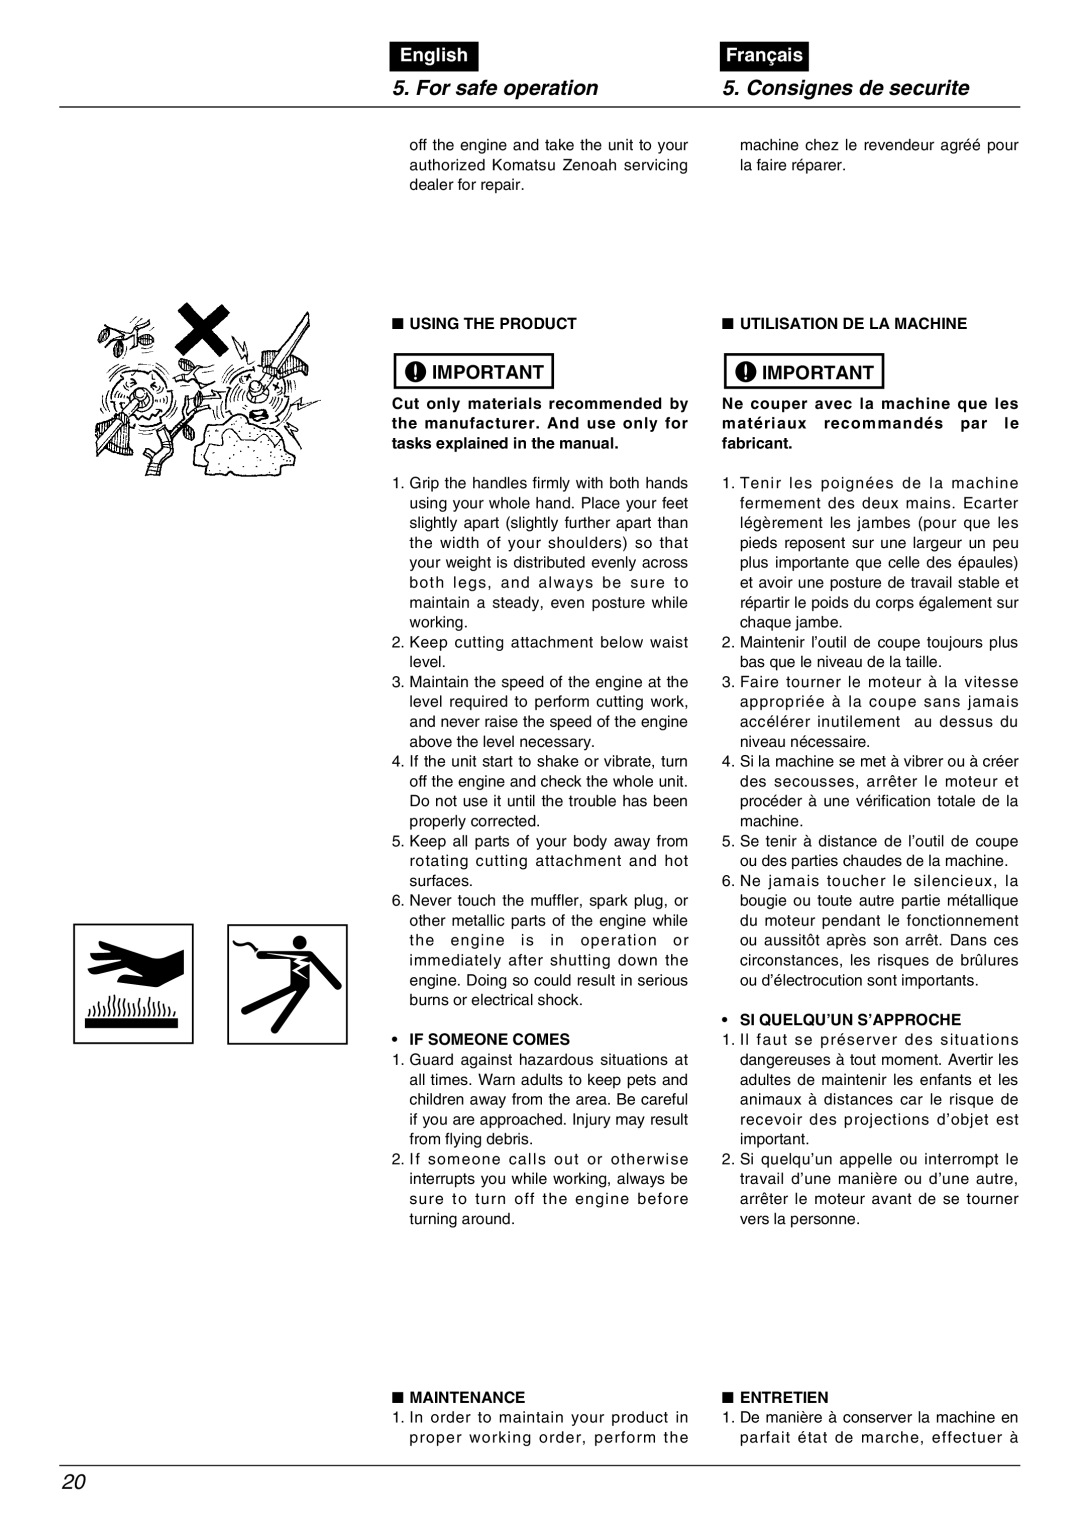 Zenoah BK5300DL manual For safe operation, Consignes de securite, English, Français, Using The Product, If Someone Comes 